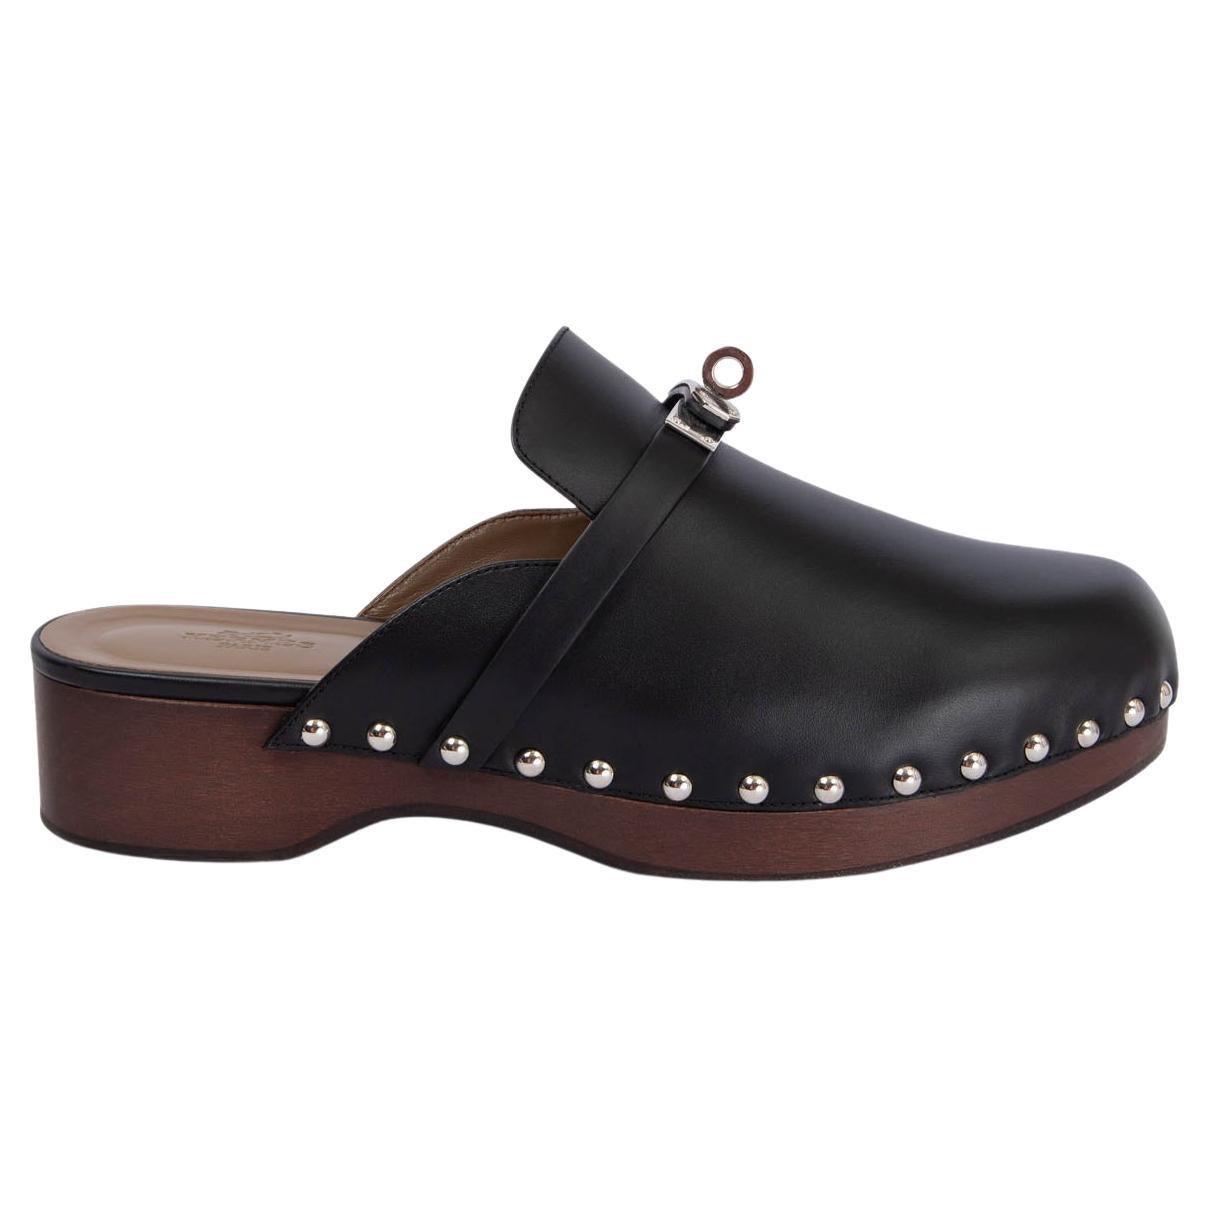 HERMES black leather CARLOTTA Clogs Mules Flats Shoes 38